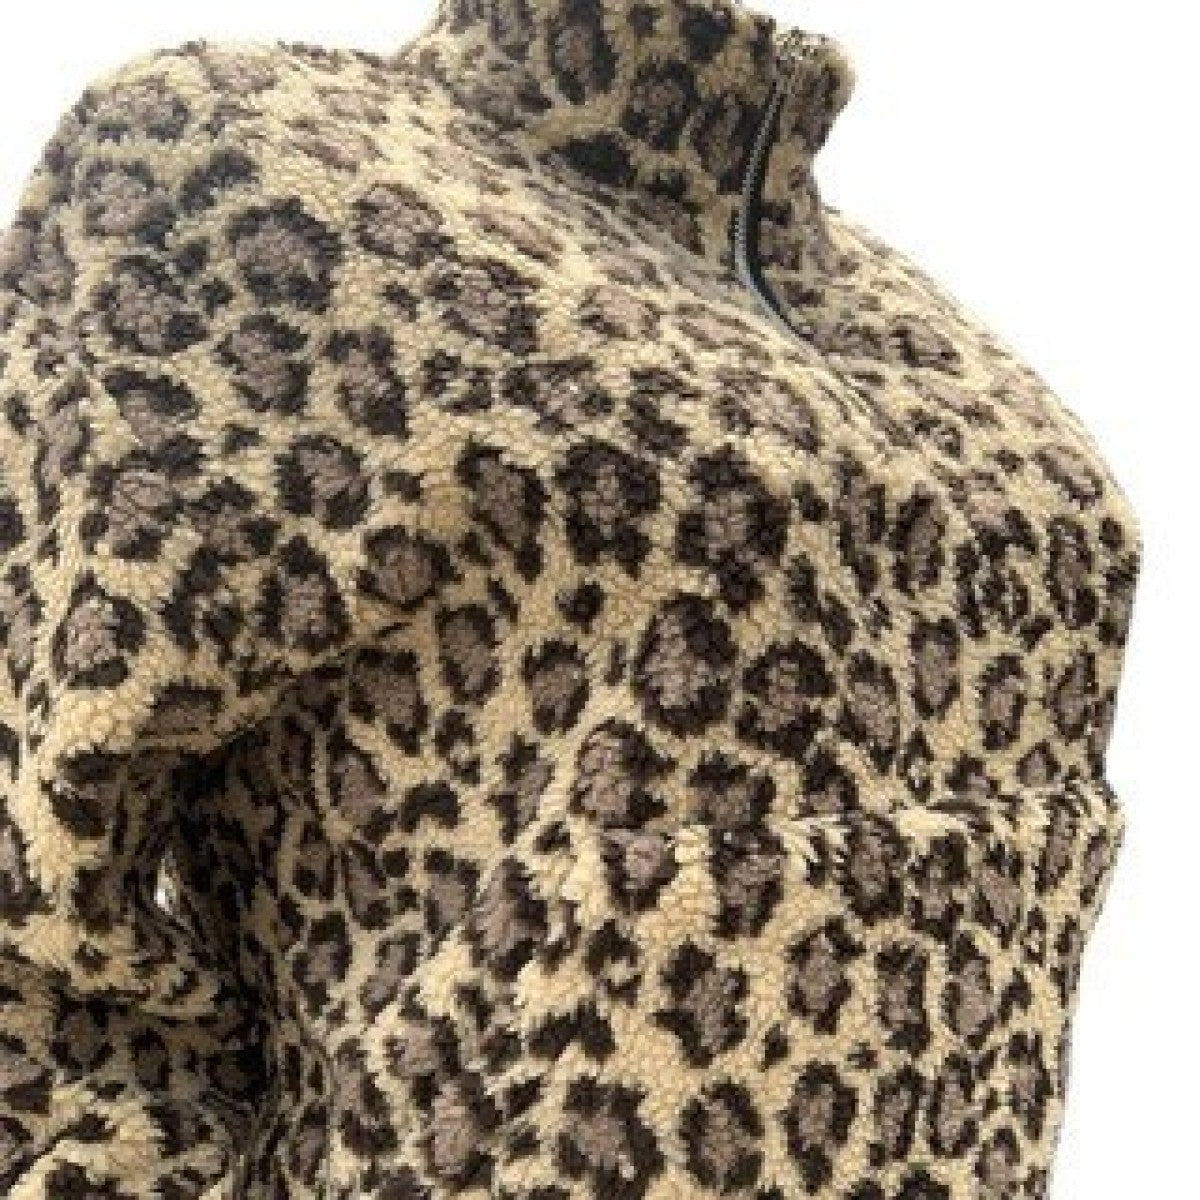 Leopard Print Crew With Zipper Long-Sleeved Sherpa Fleece Jackets